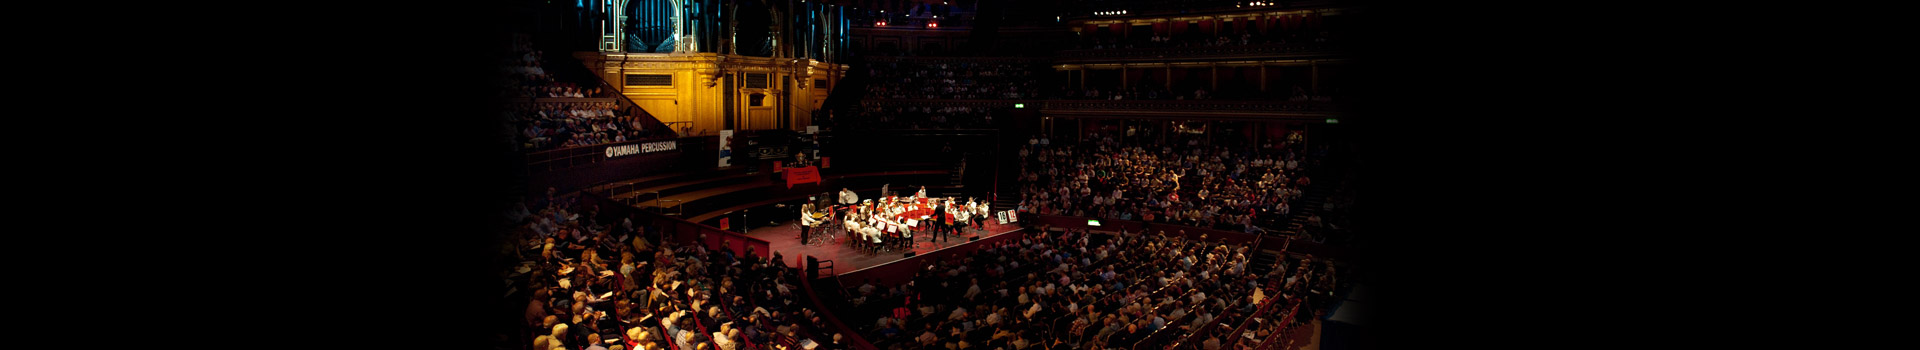 National Brass Band Championship tickets at the Royal Albert Hall